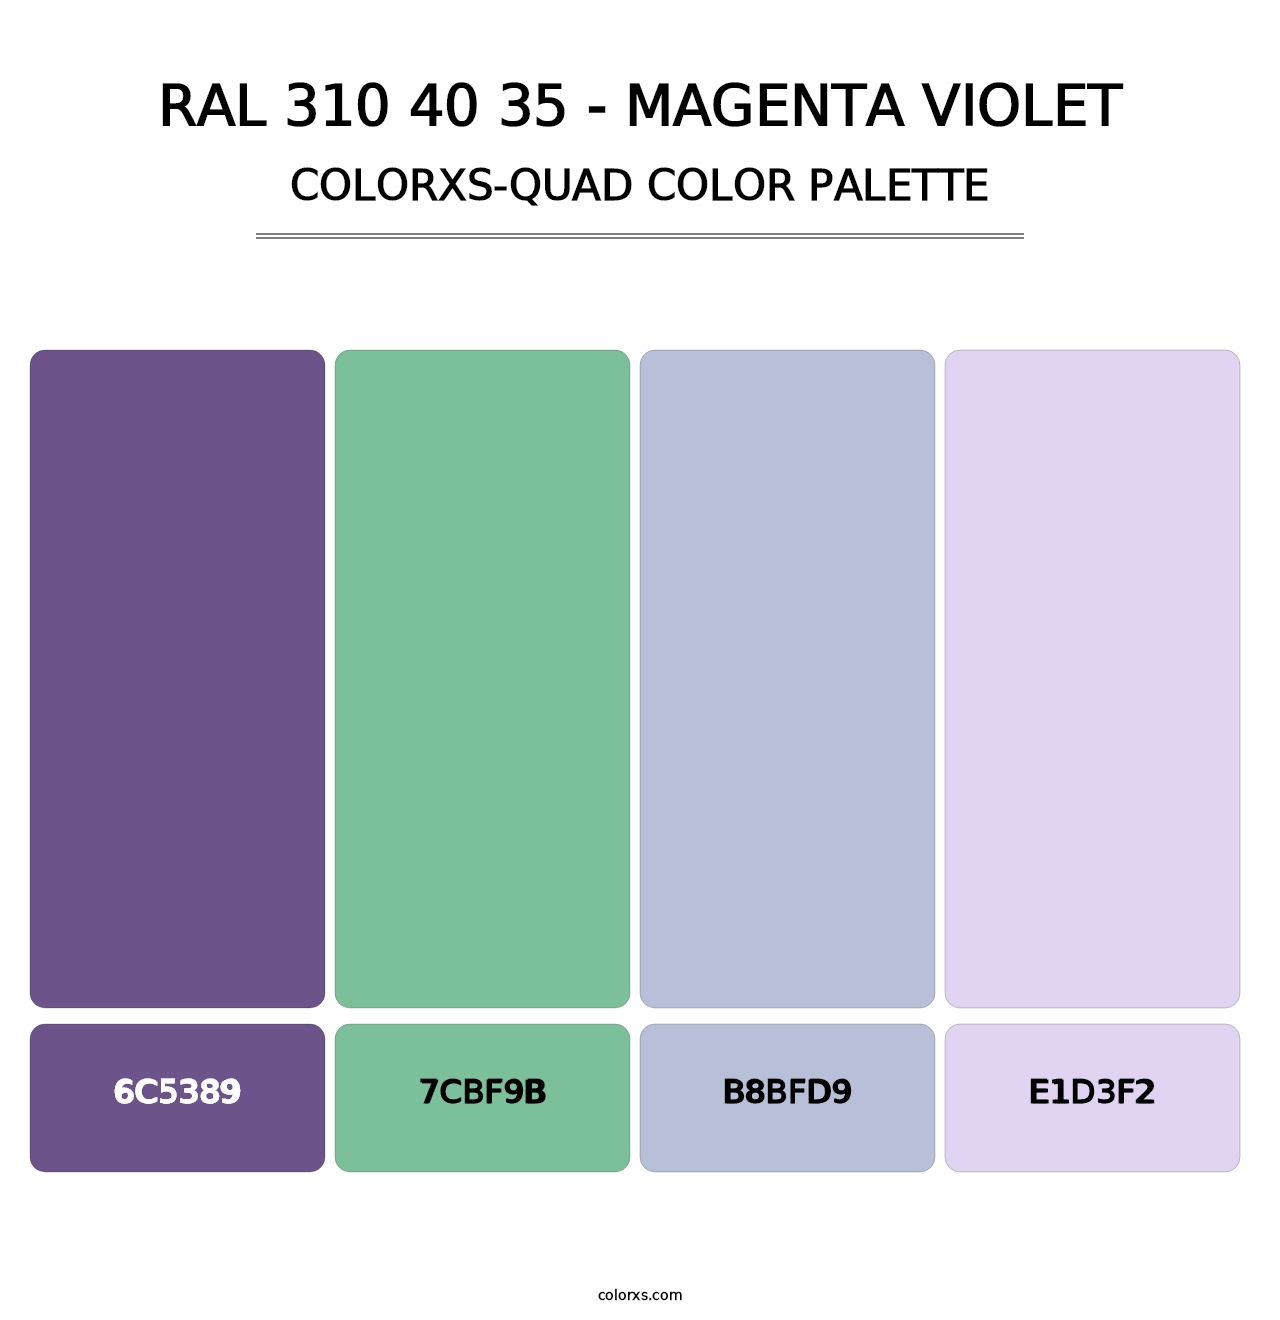 RAL 310 40 35 - Magenta Violet - Colorxs Quad Palette